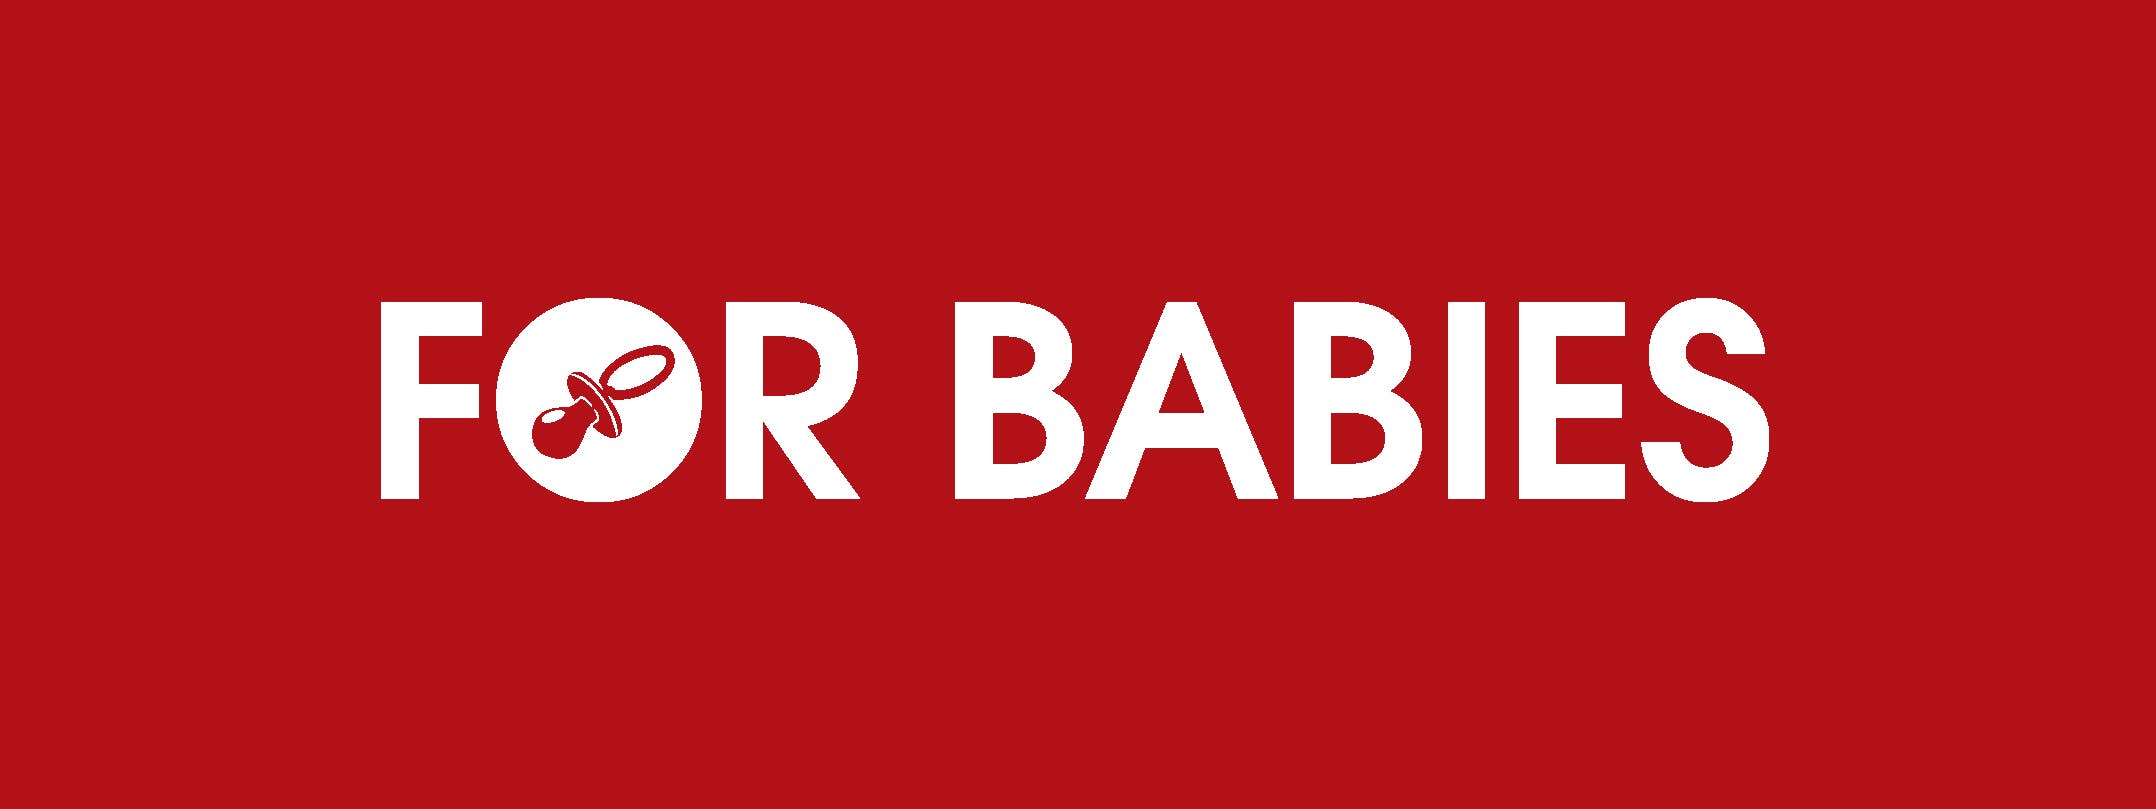 FOR BABIES 2021 - PVA EXPO PRAHA